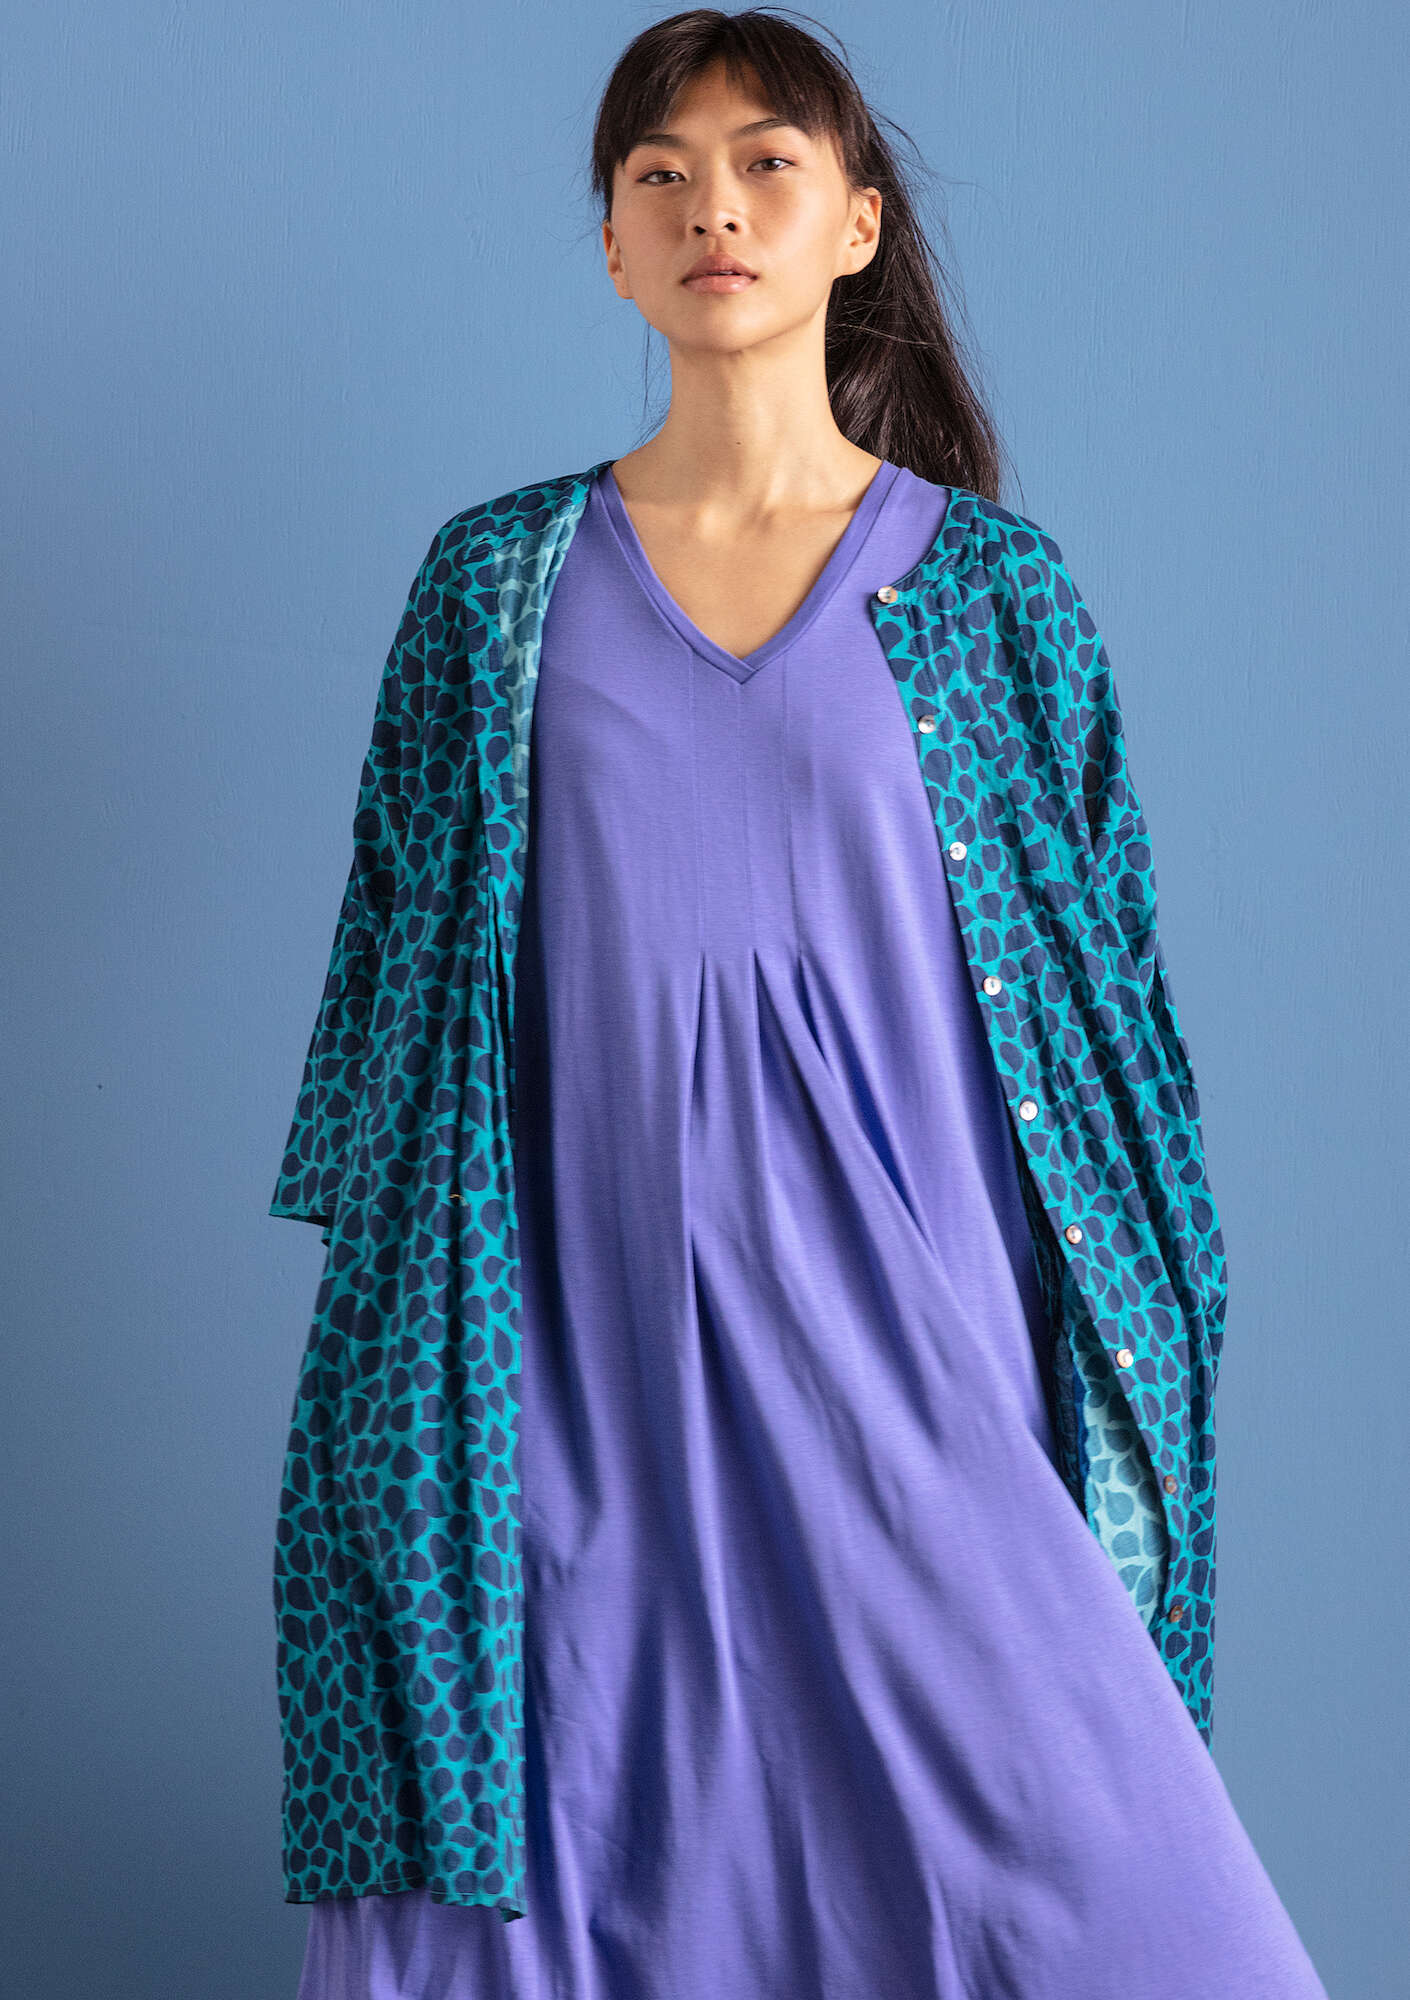 Serafina dress turquoise/patterned